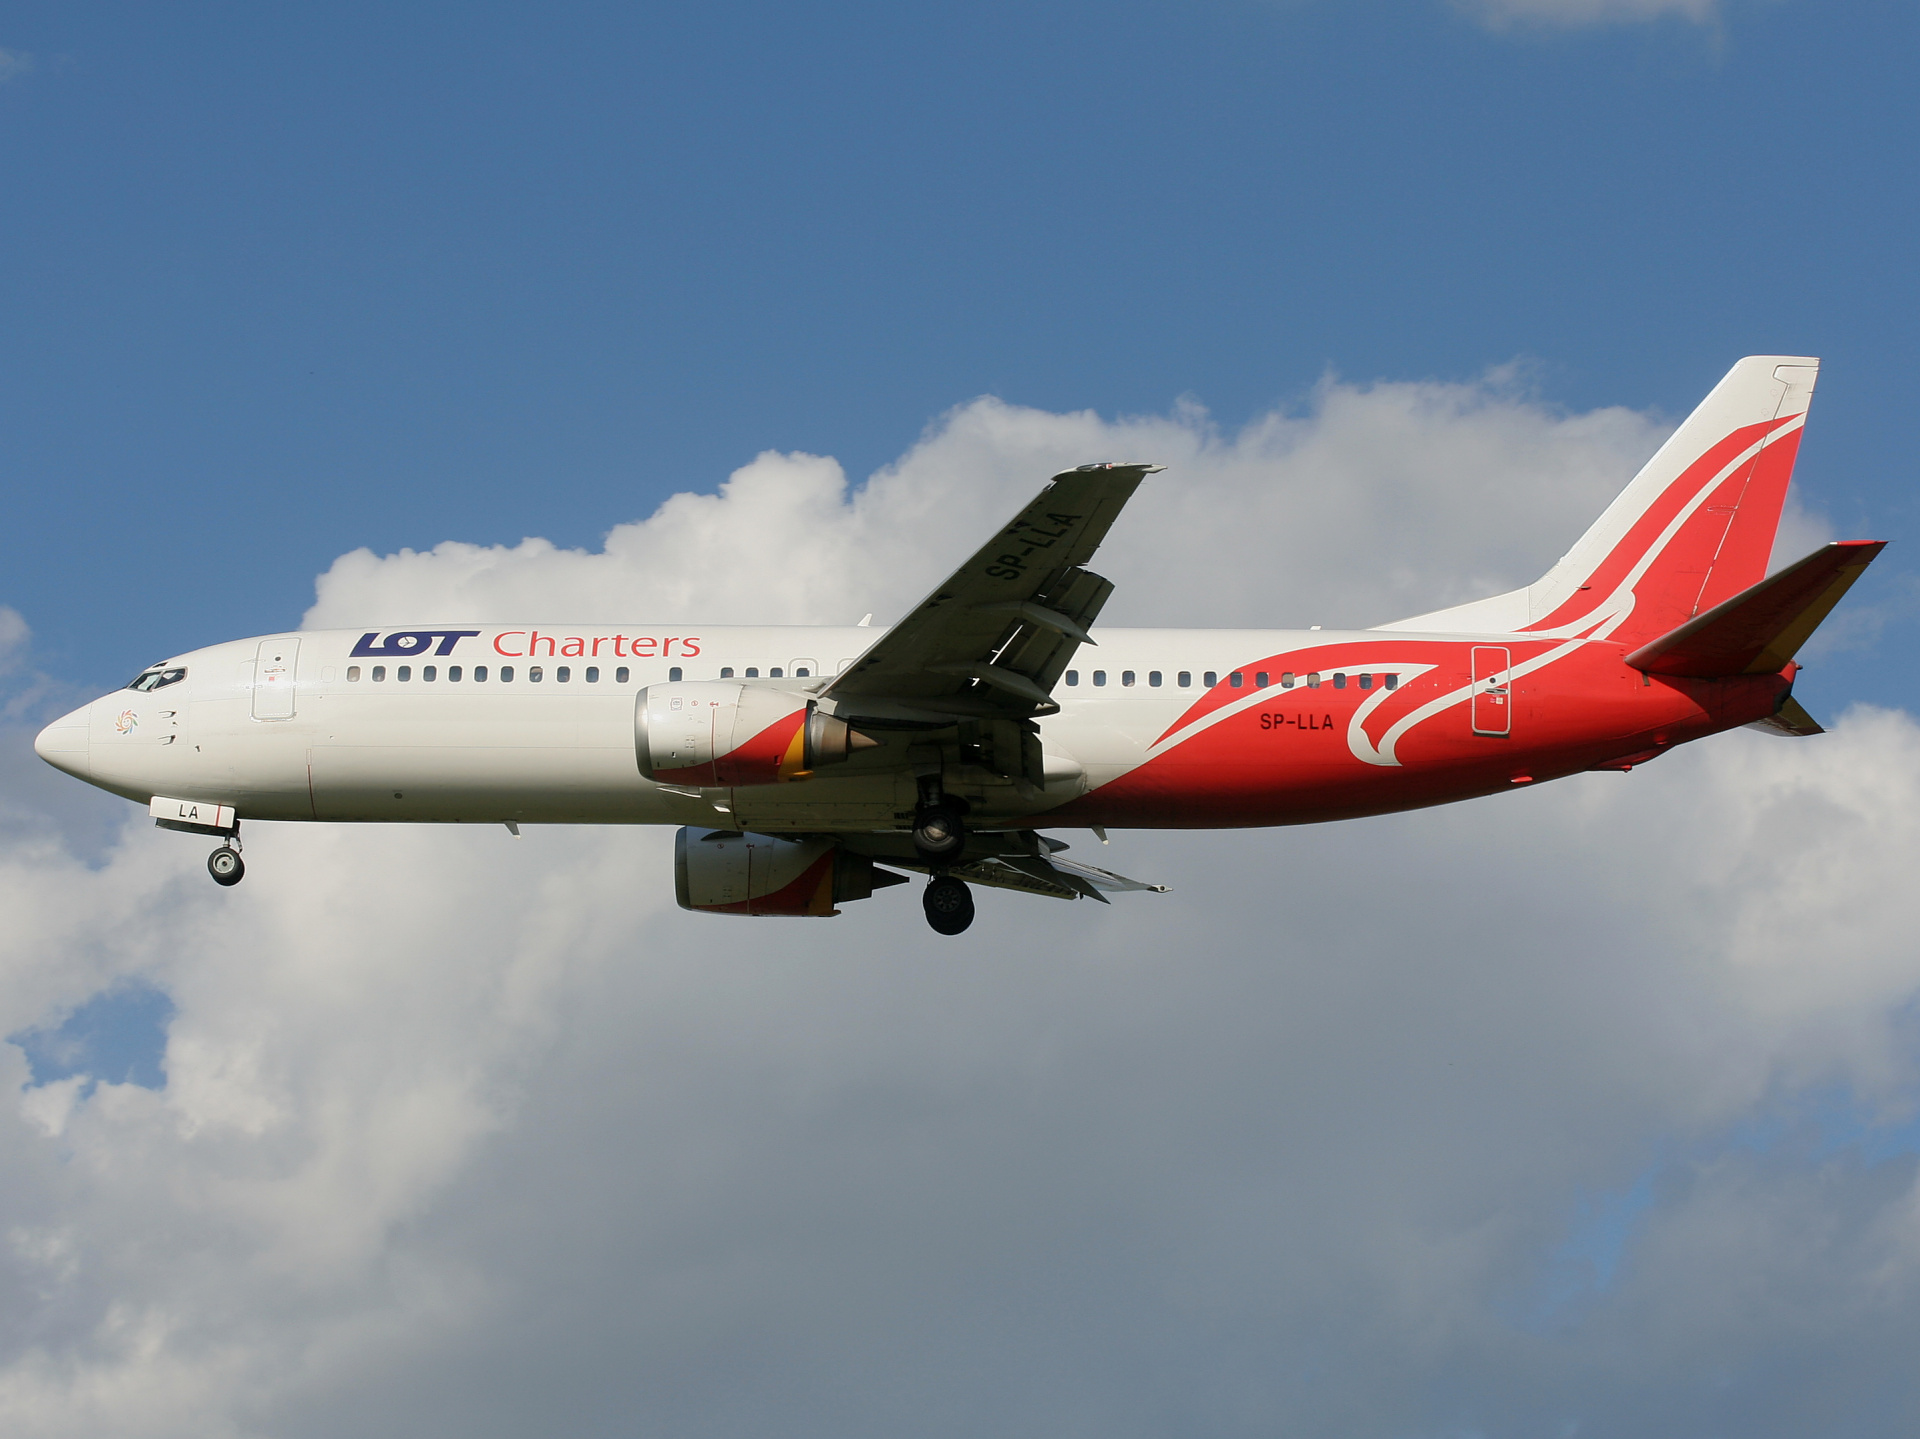 SP-LLA (Aircraft » EPWA Spotting » Boeing 737-400 » LOT Charters)